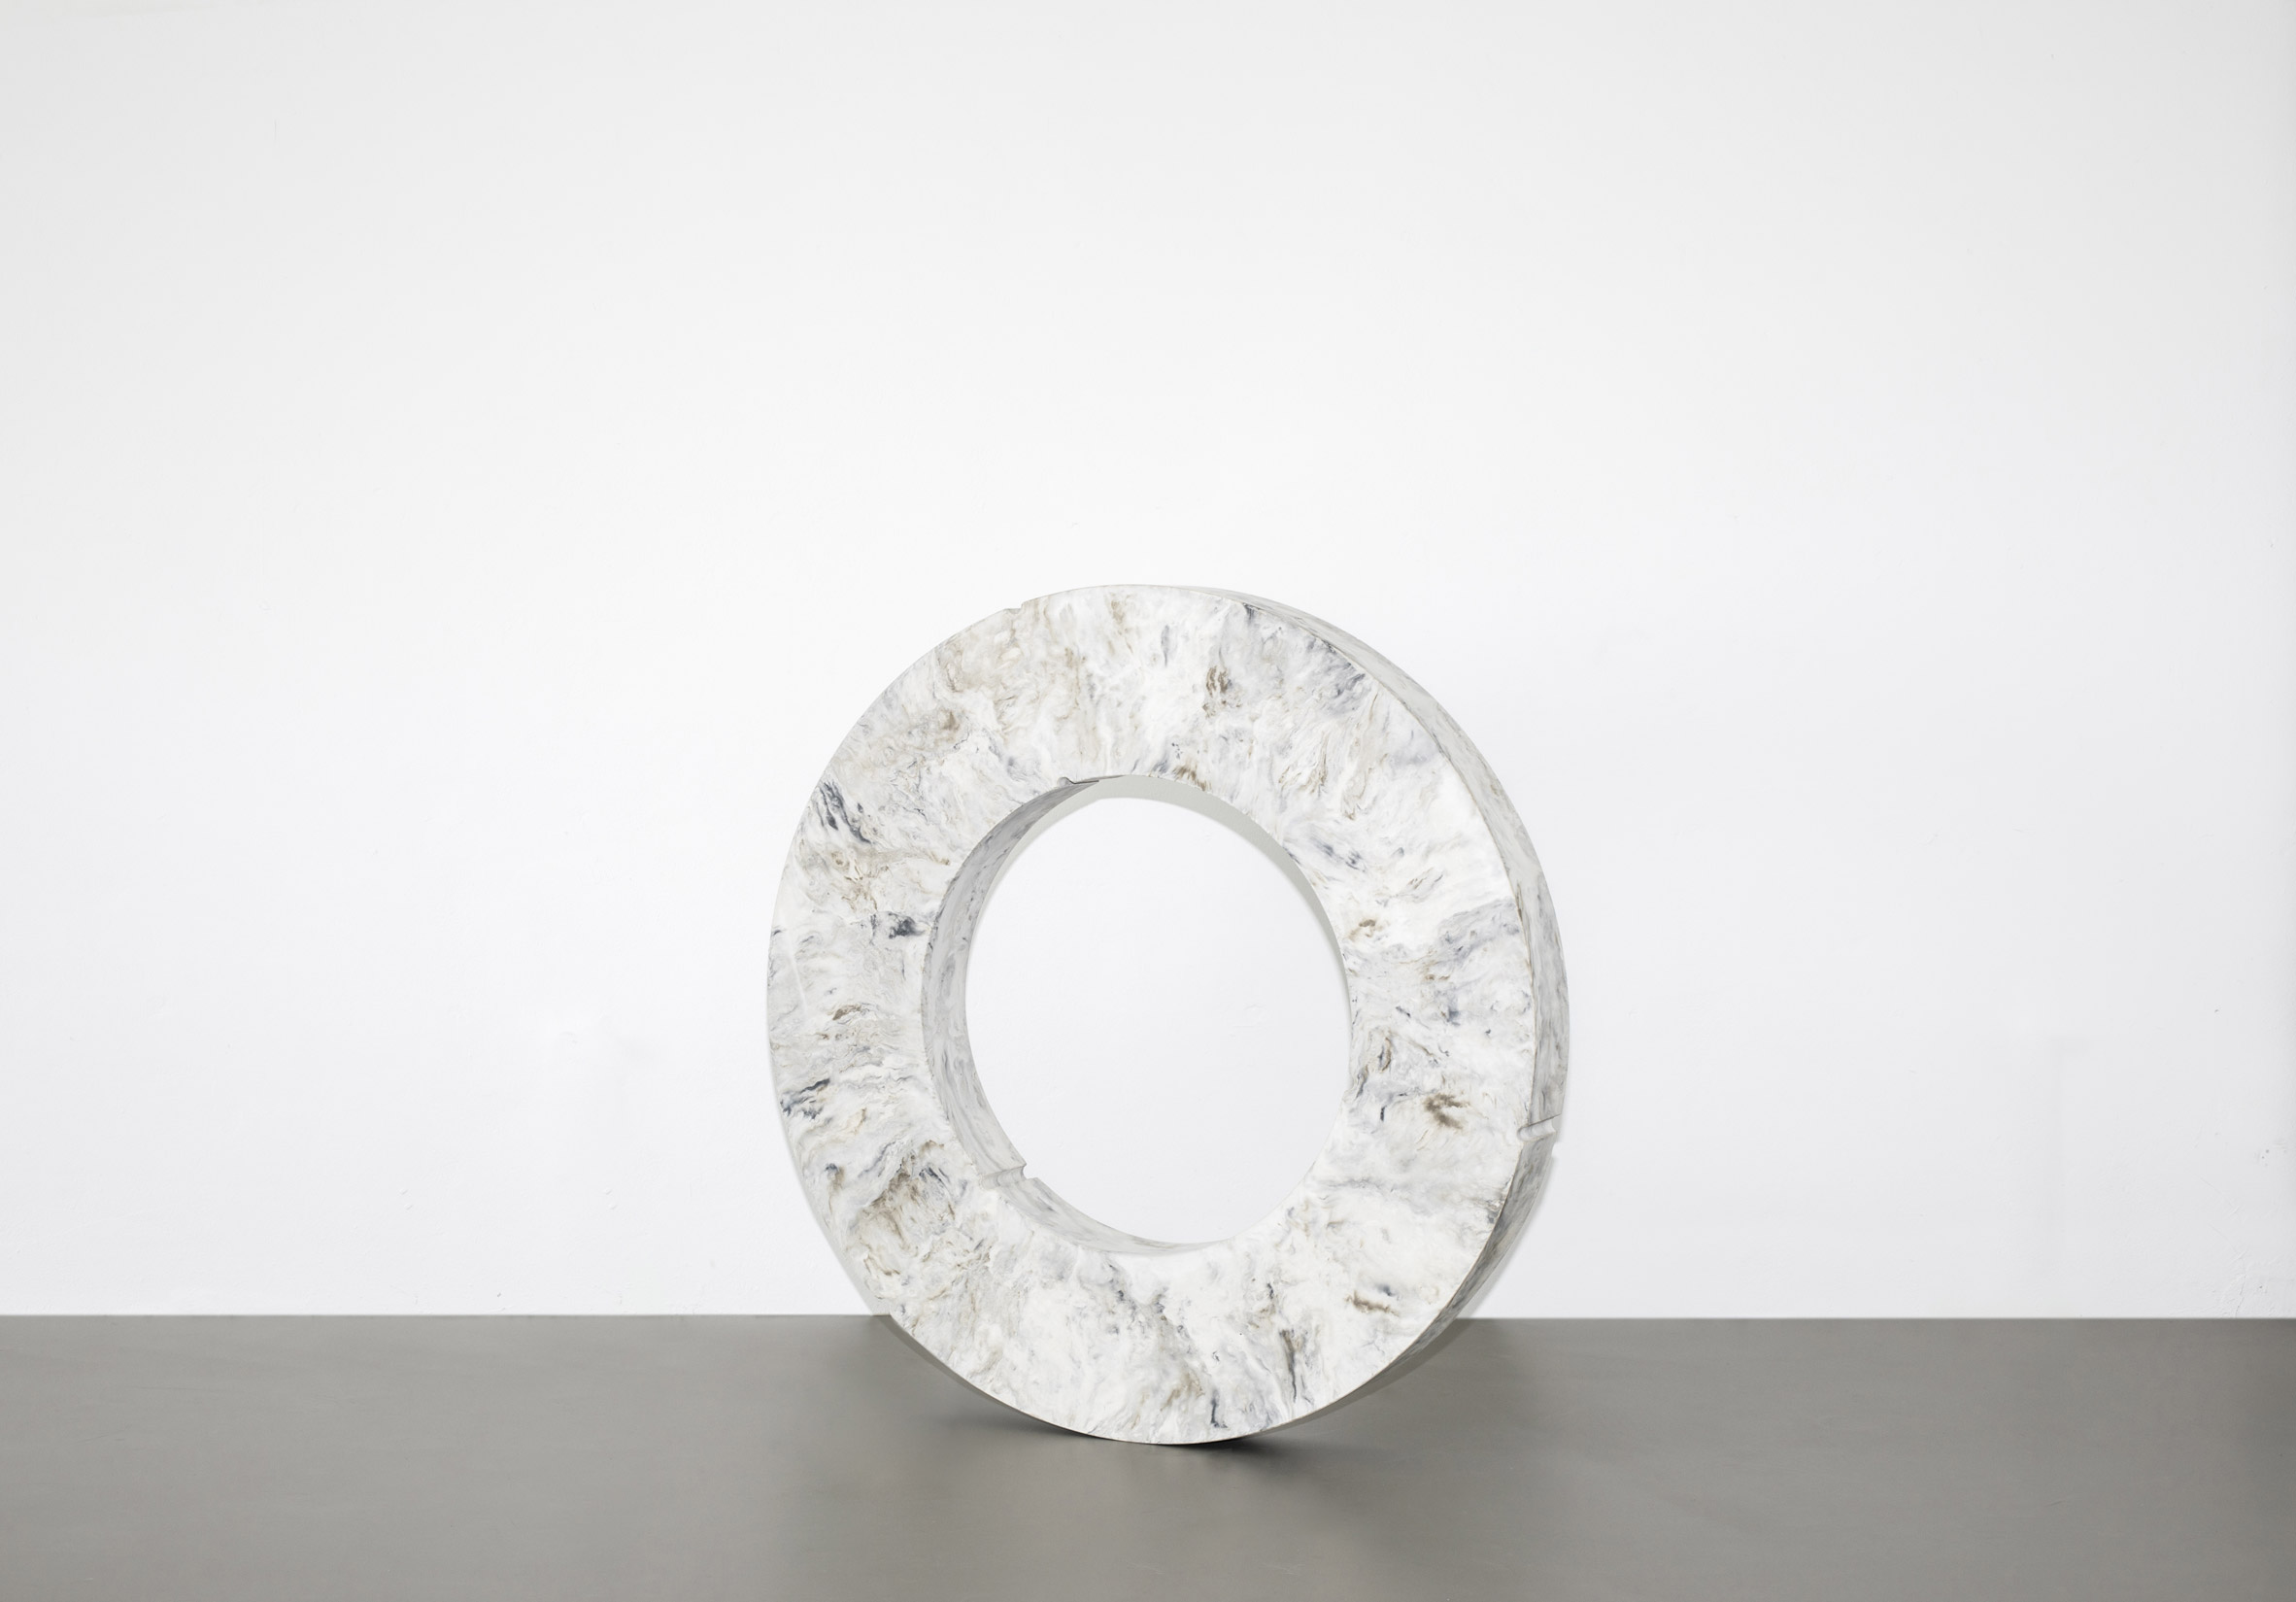 Pigmented concrete emulates sculptural stone in Gestalt furniture by Sment